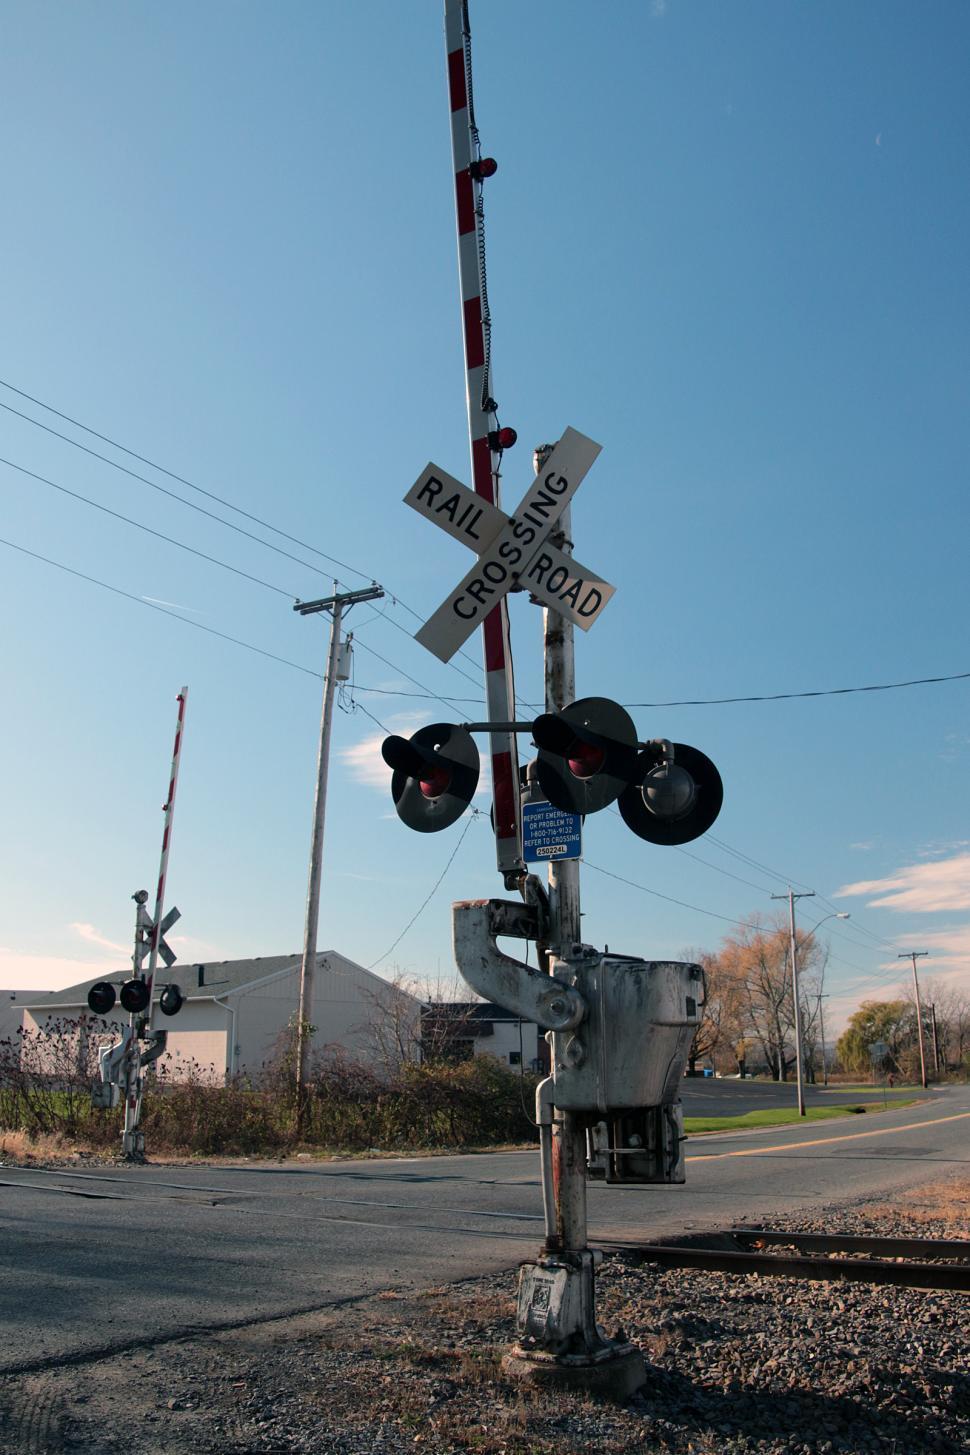 Free Image of Rural Railroad Crossing 